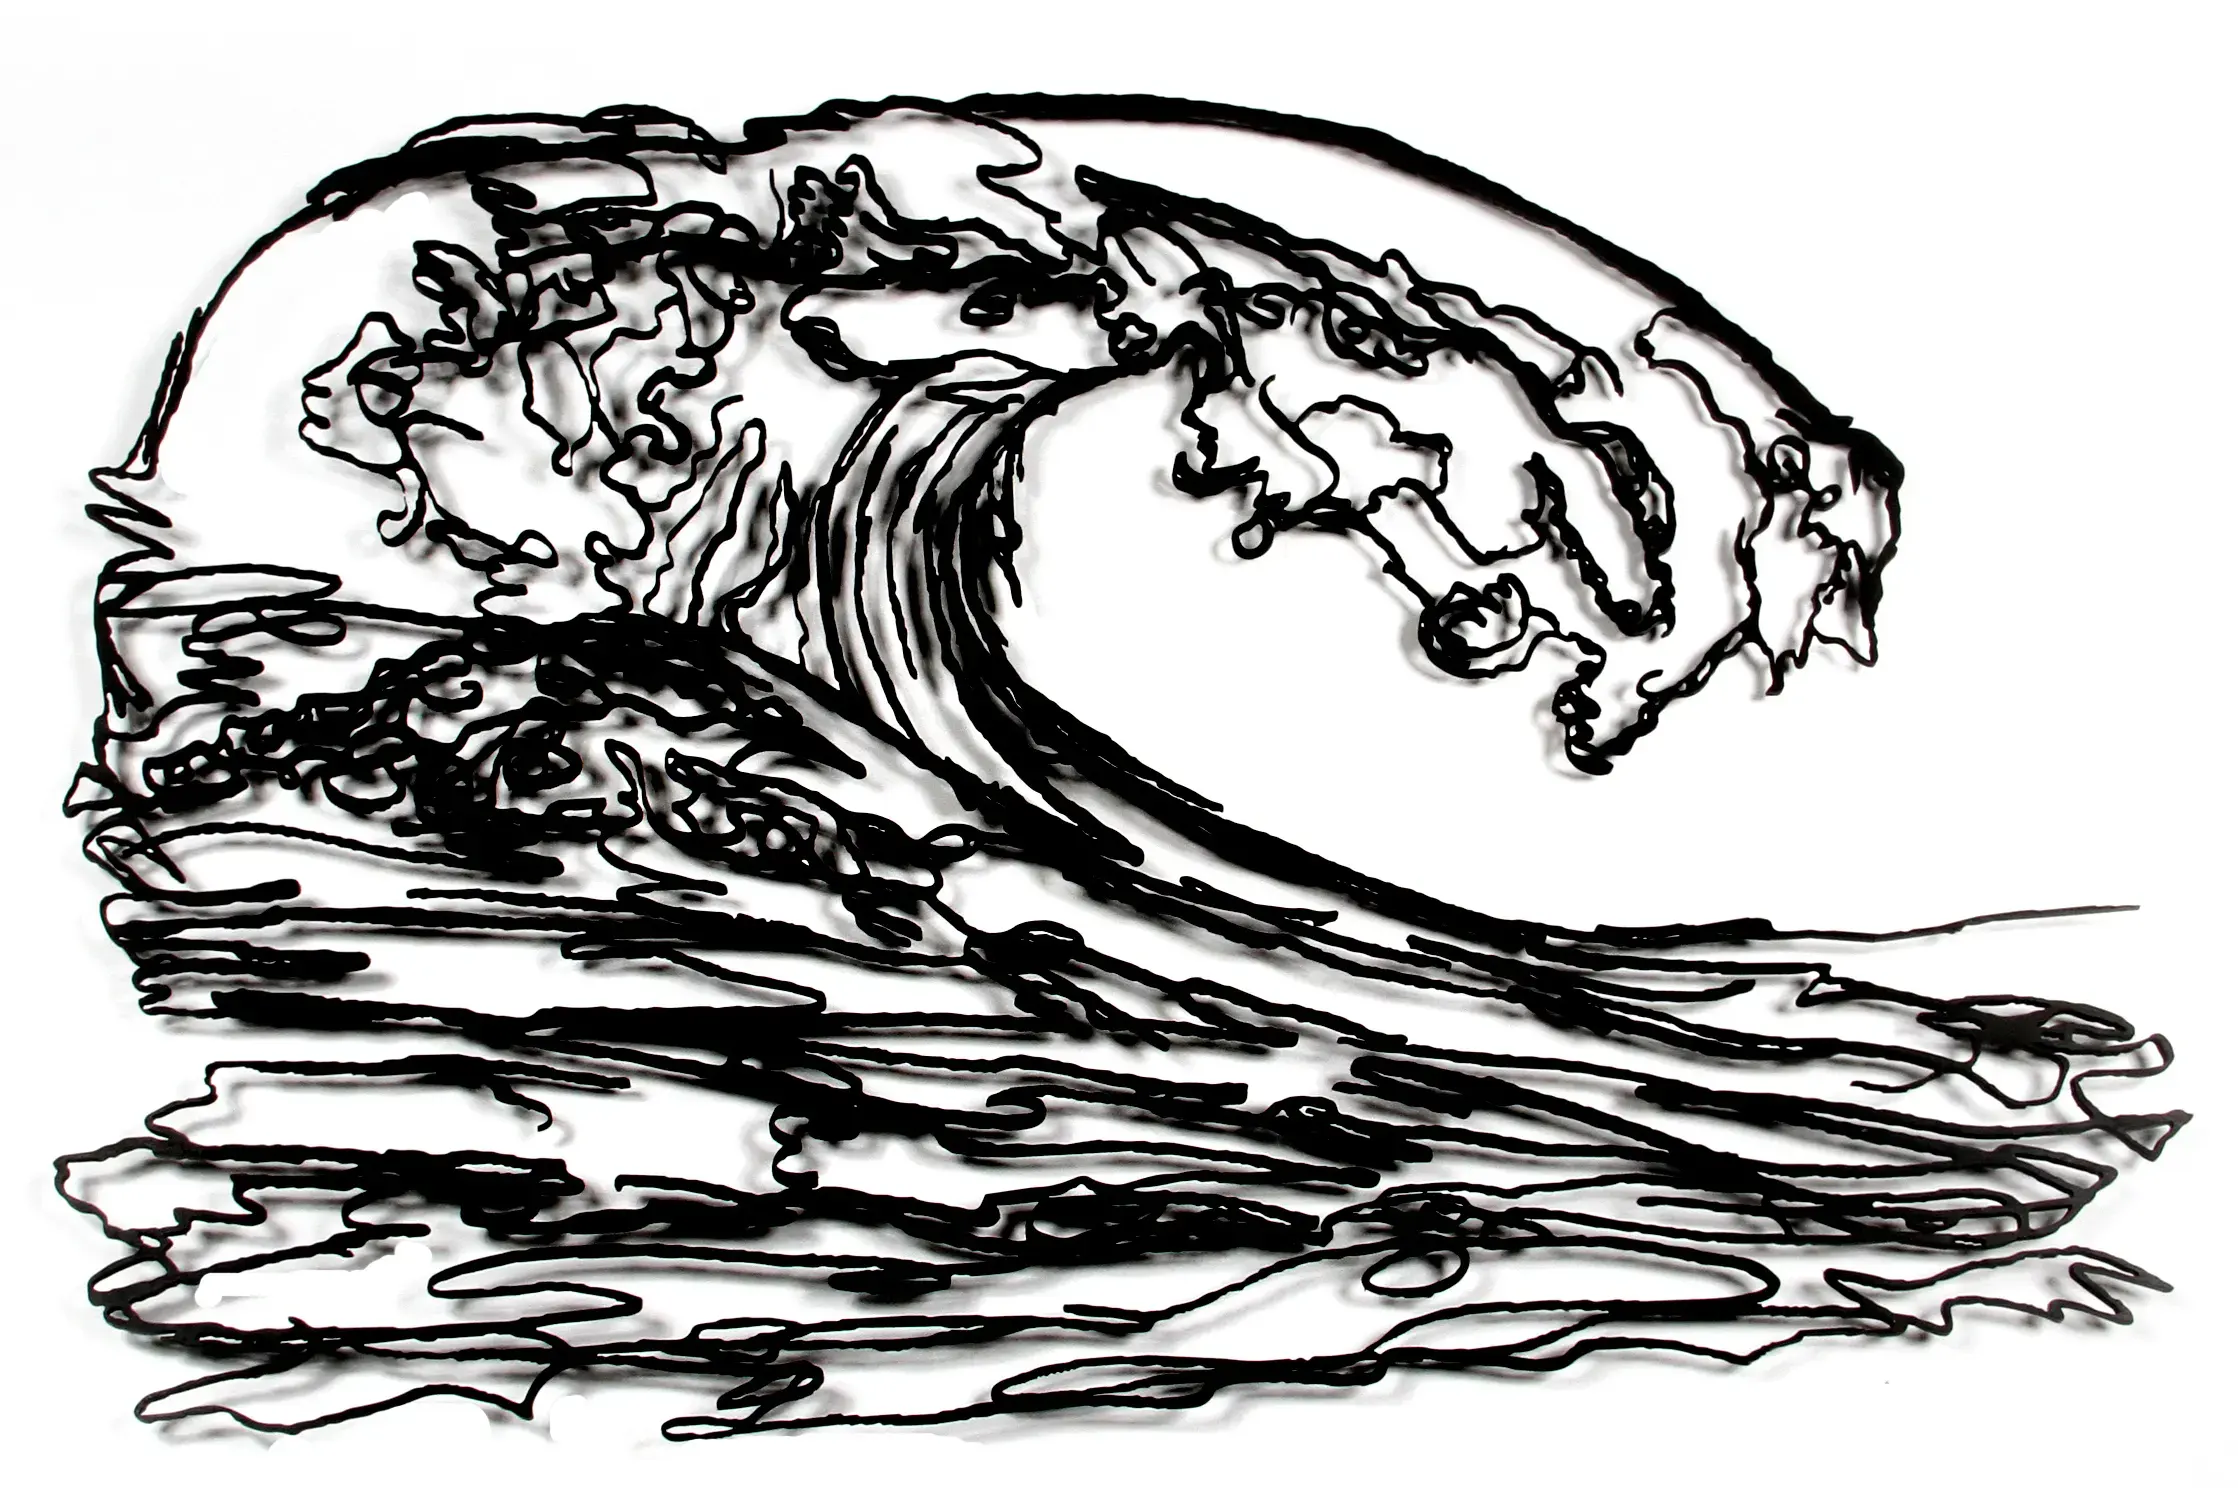 Metal sketch of a wave